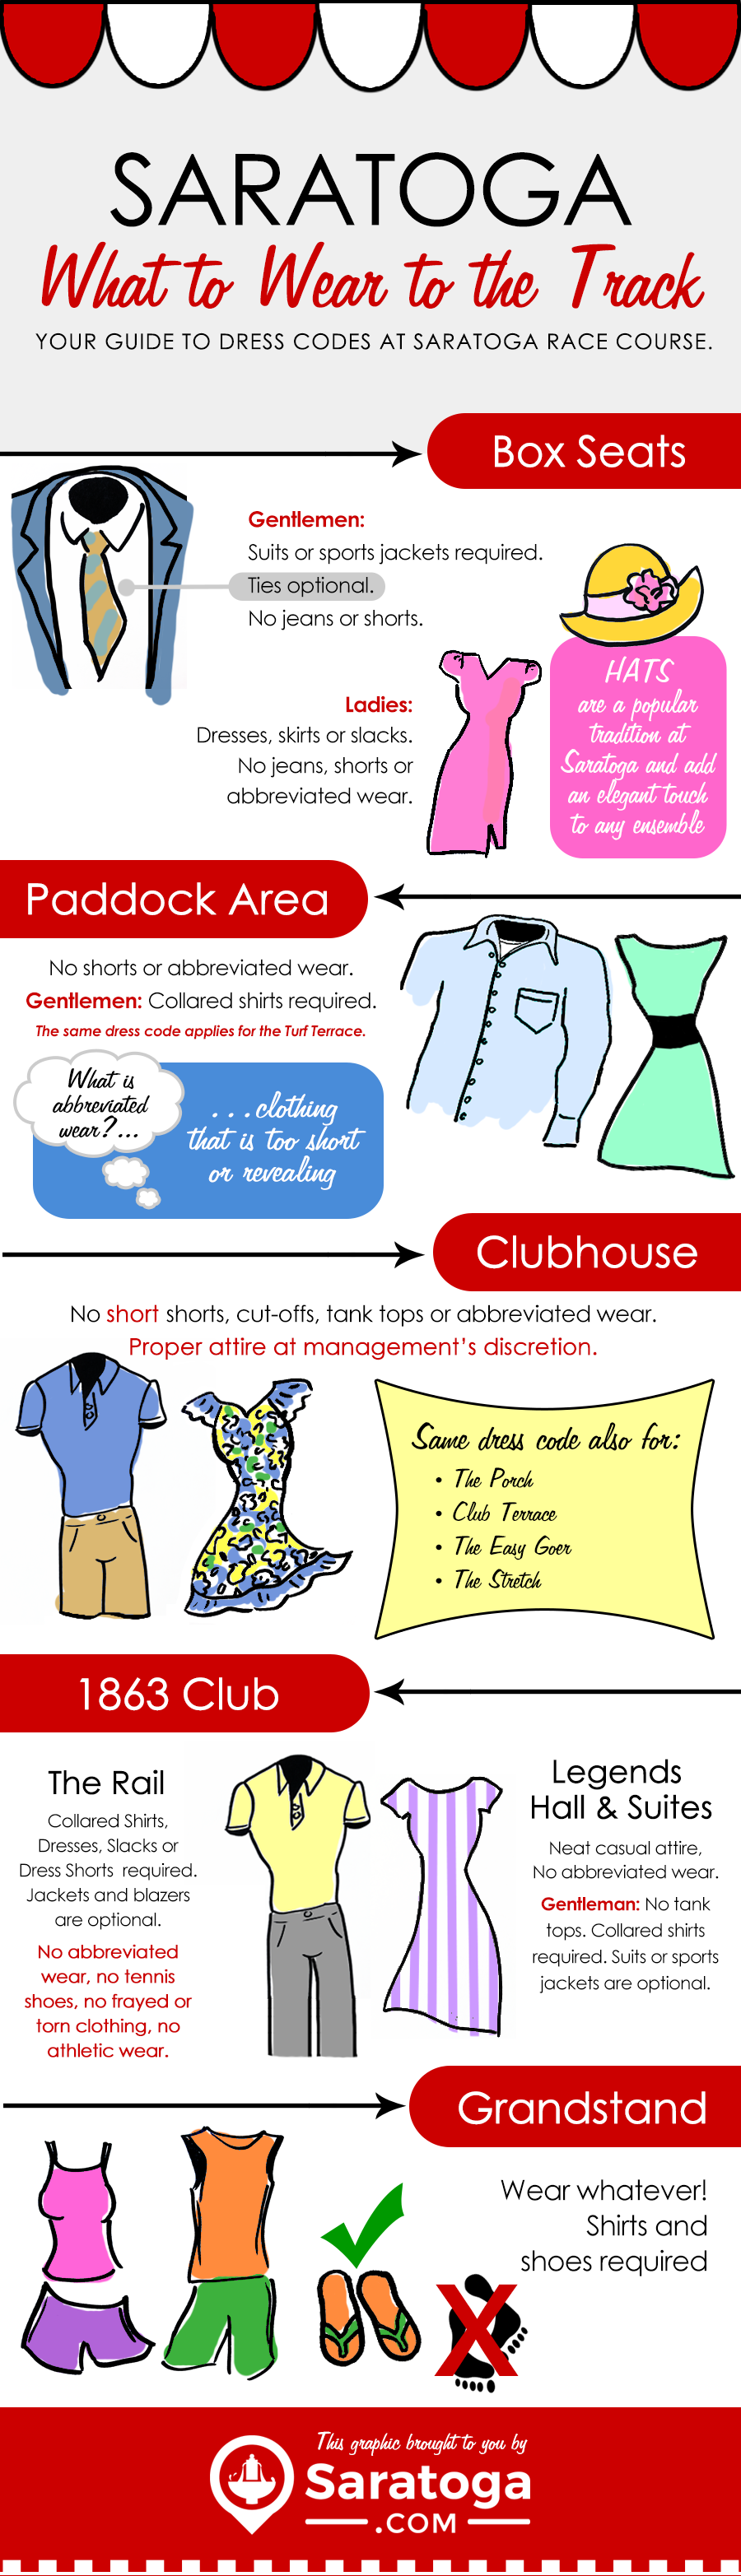 saratoga race course dress code infographic